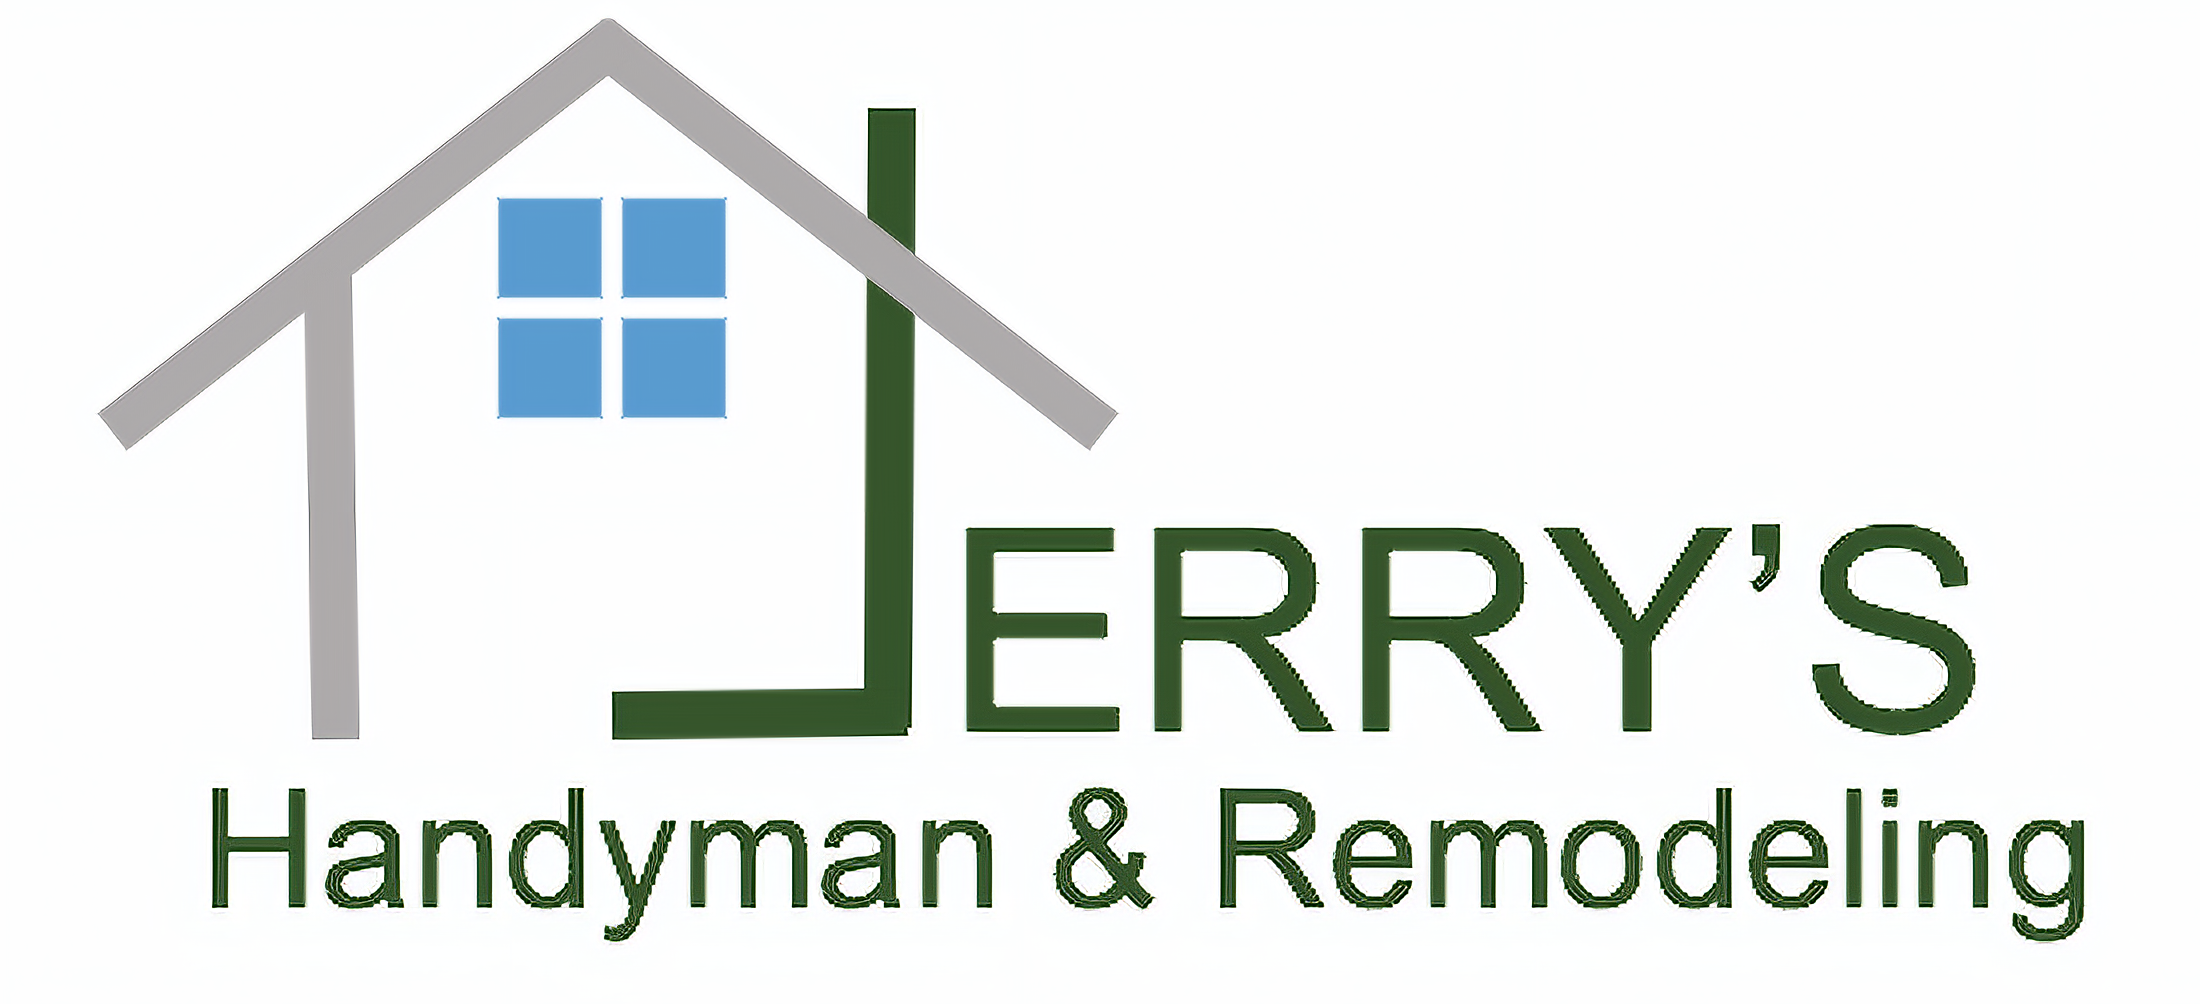 Jerry's Handyman & Remodeling Logo